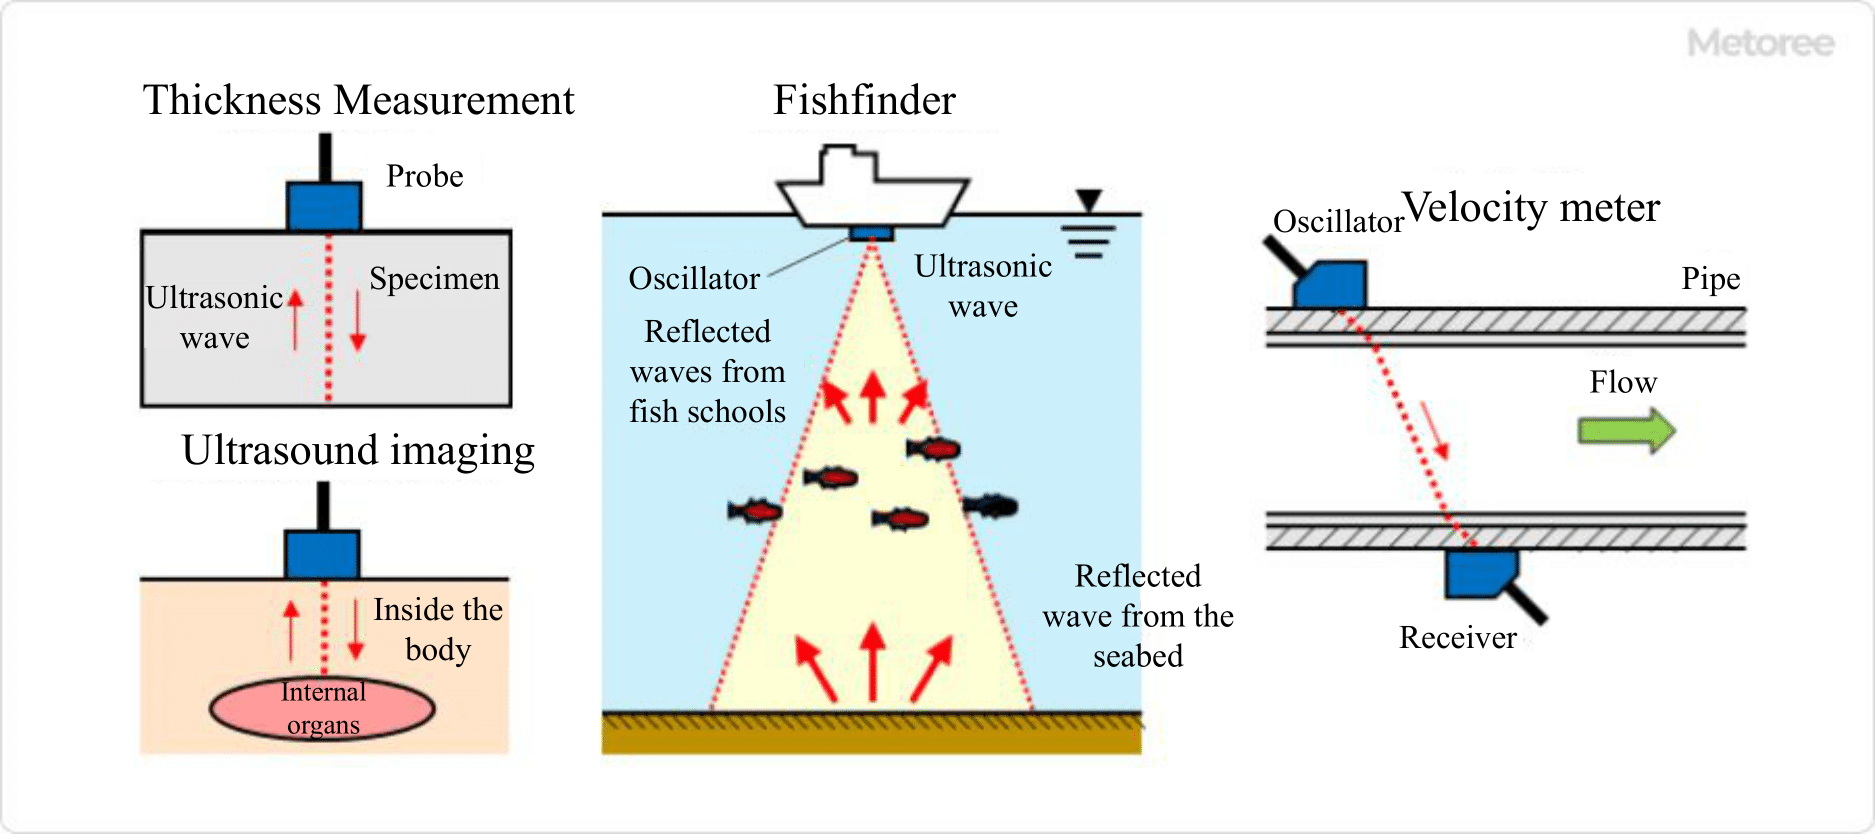 Figure 1. Uses of ultrasonic instrumentation